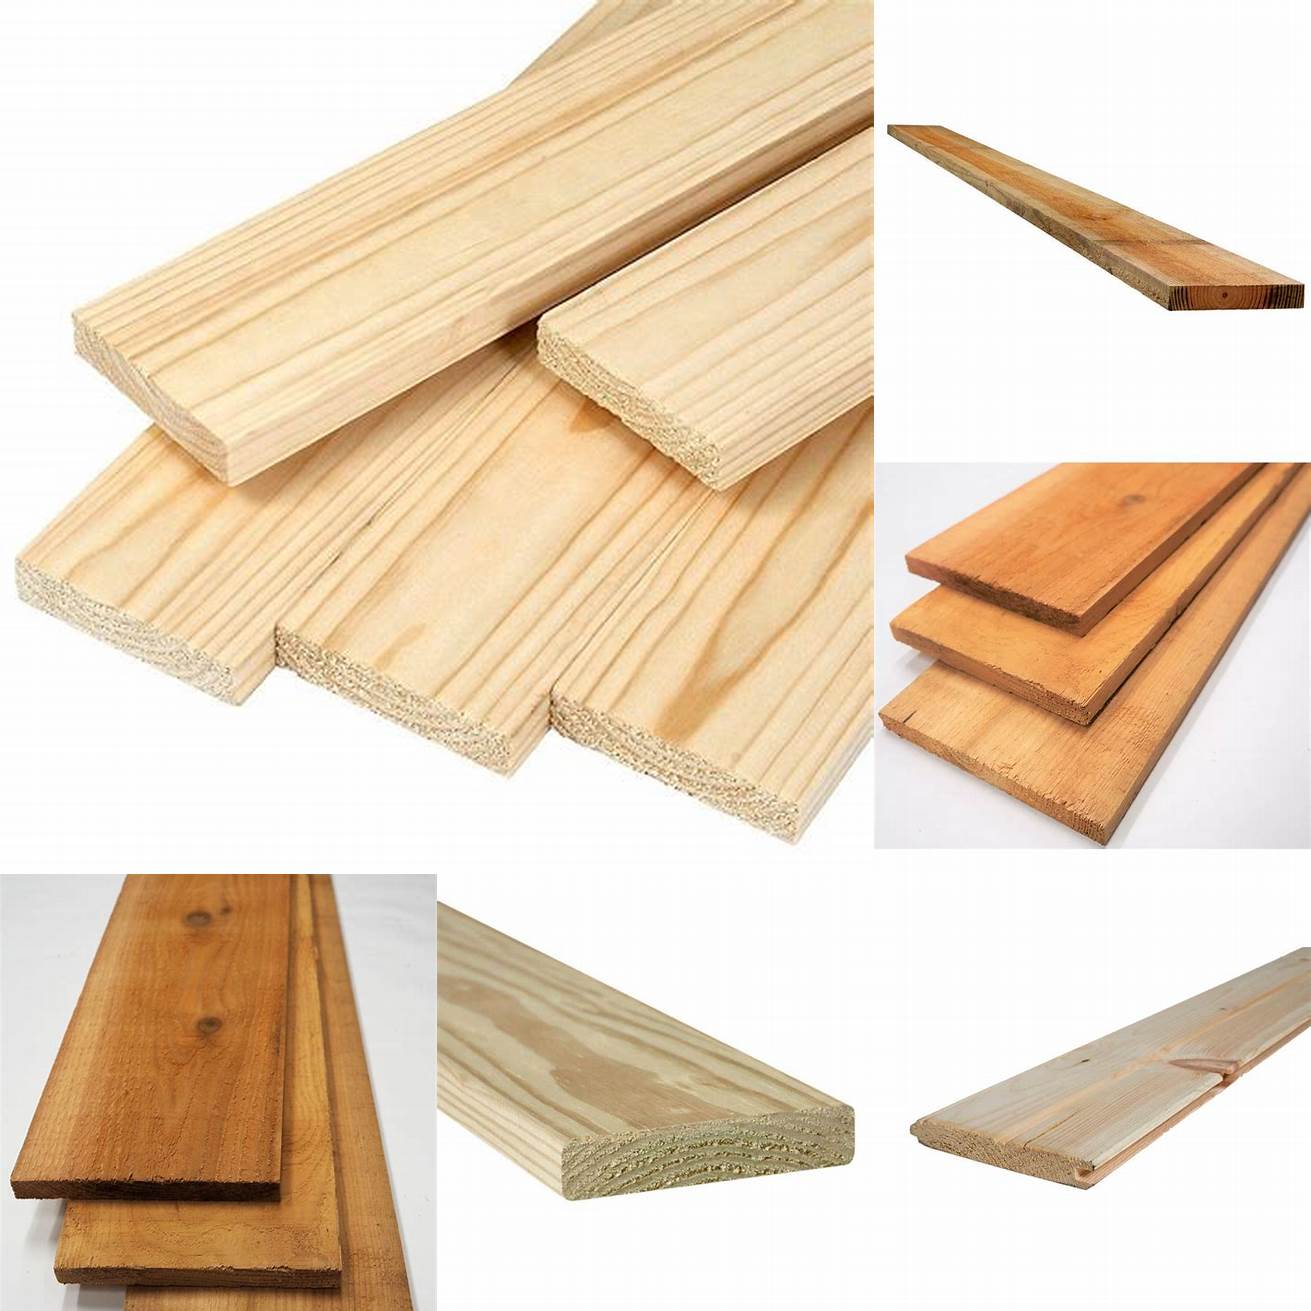 1 Wood boards